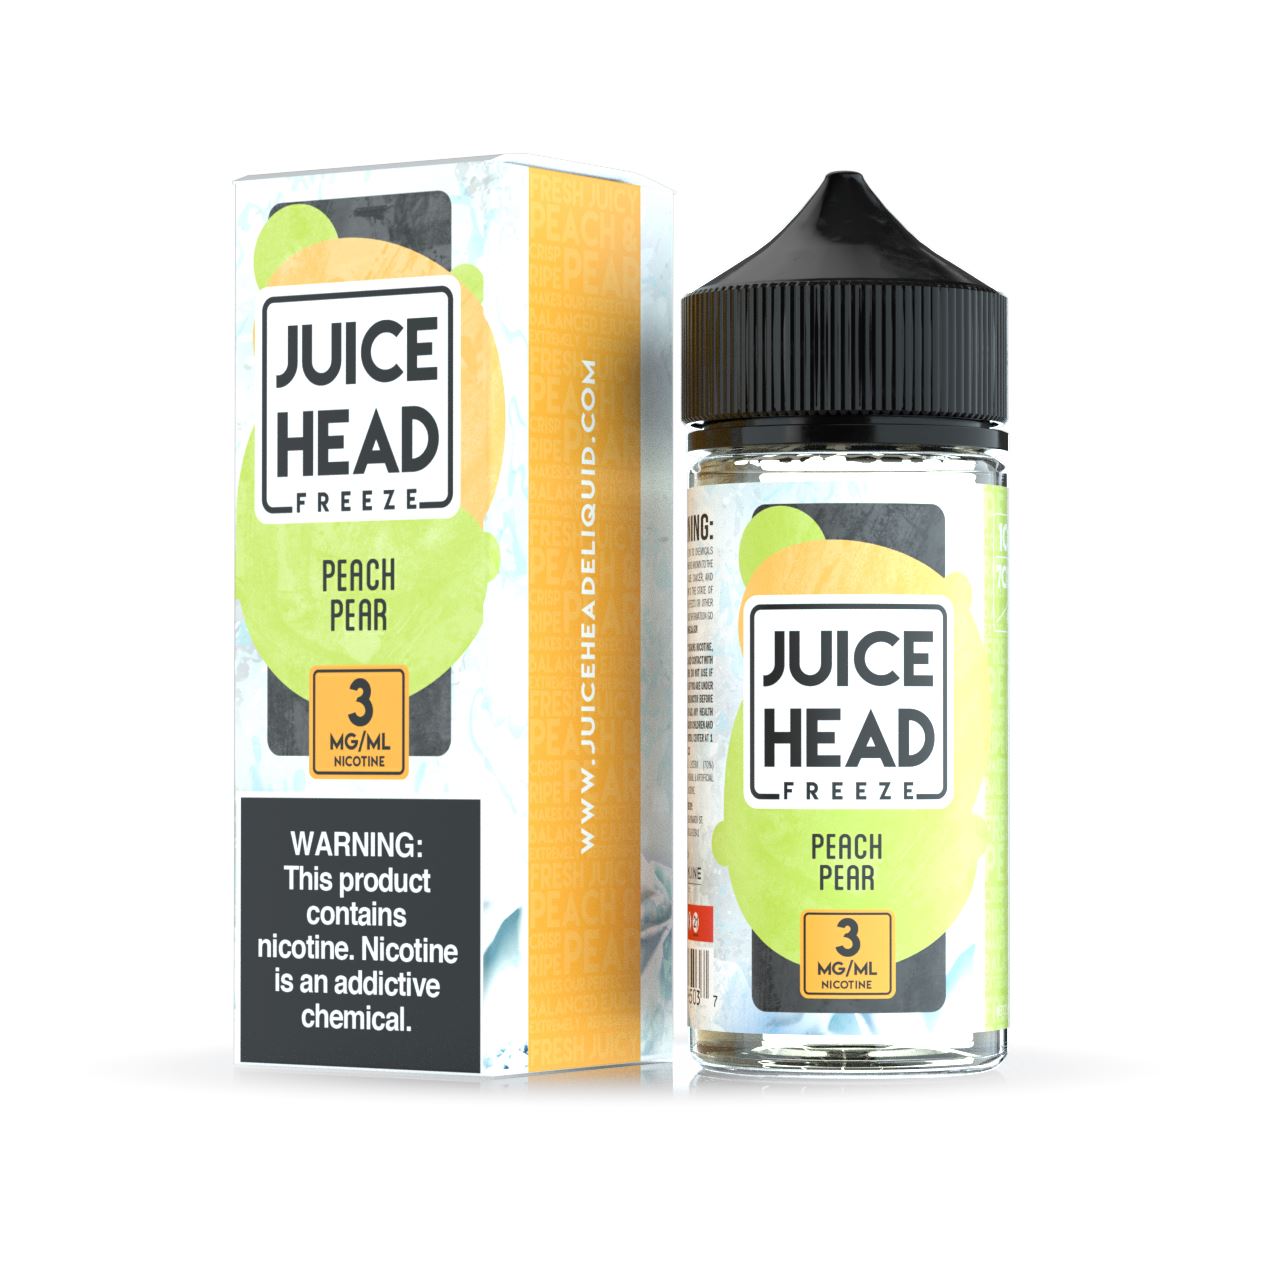 Juice Head Freeze - Peach Pear - Vapoureyes